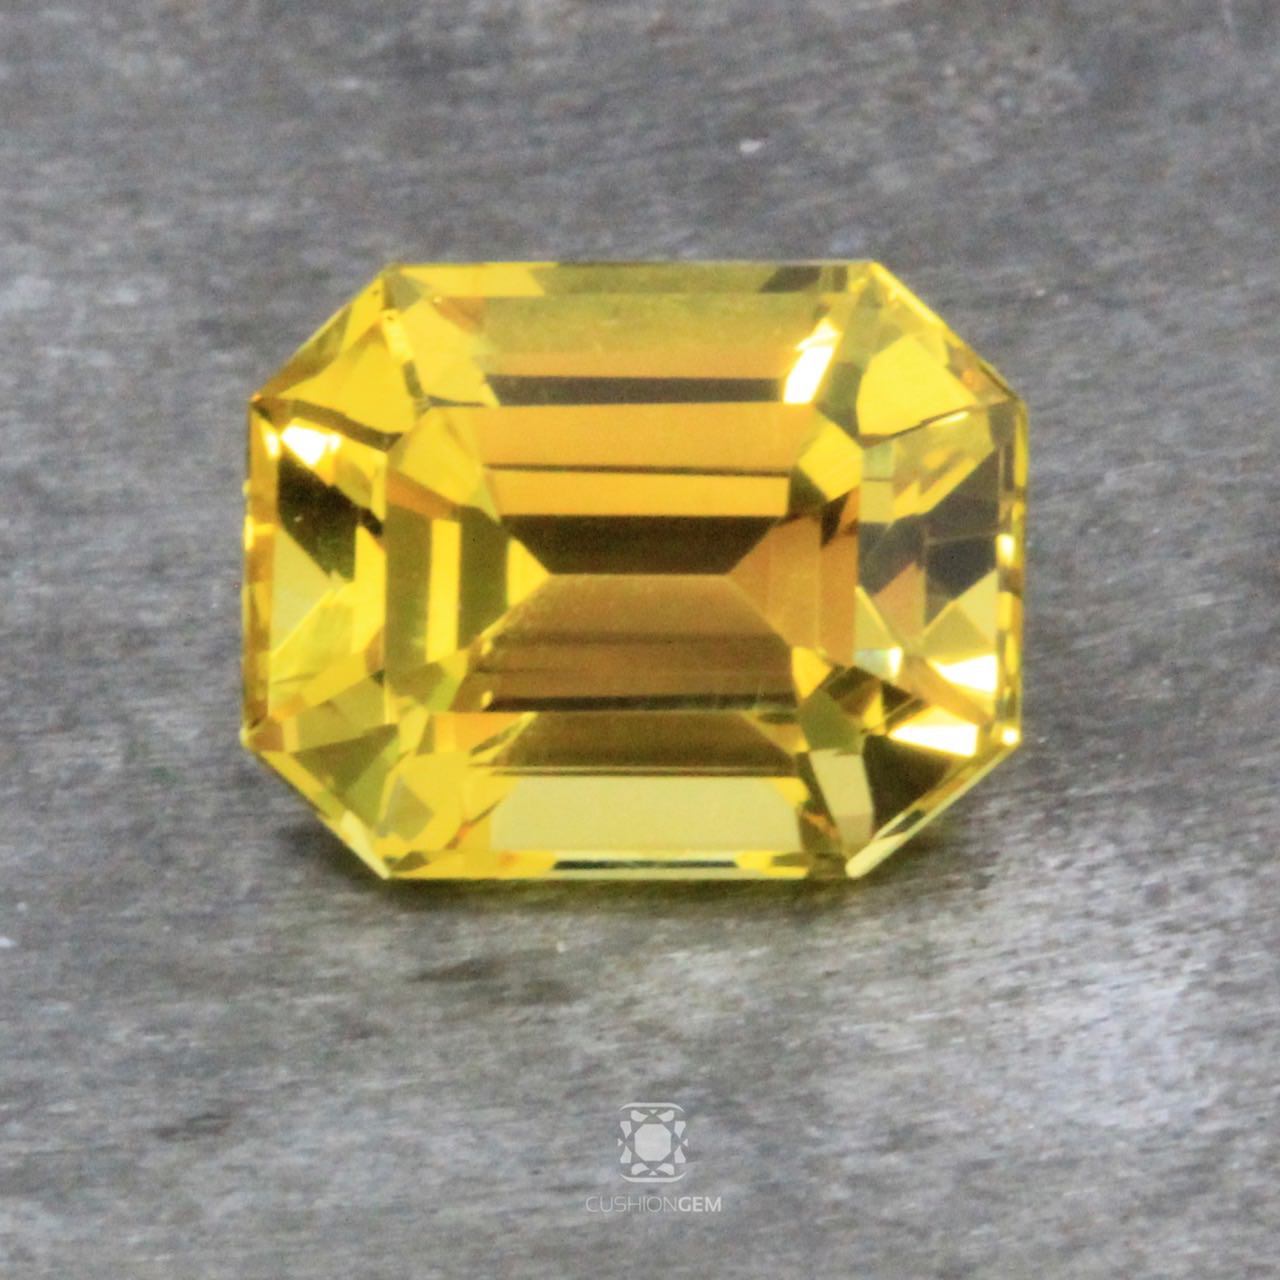 A 6 carat lemon yellow un-heated sapphire